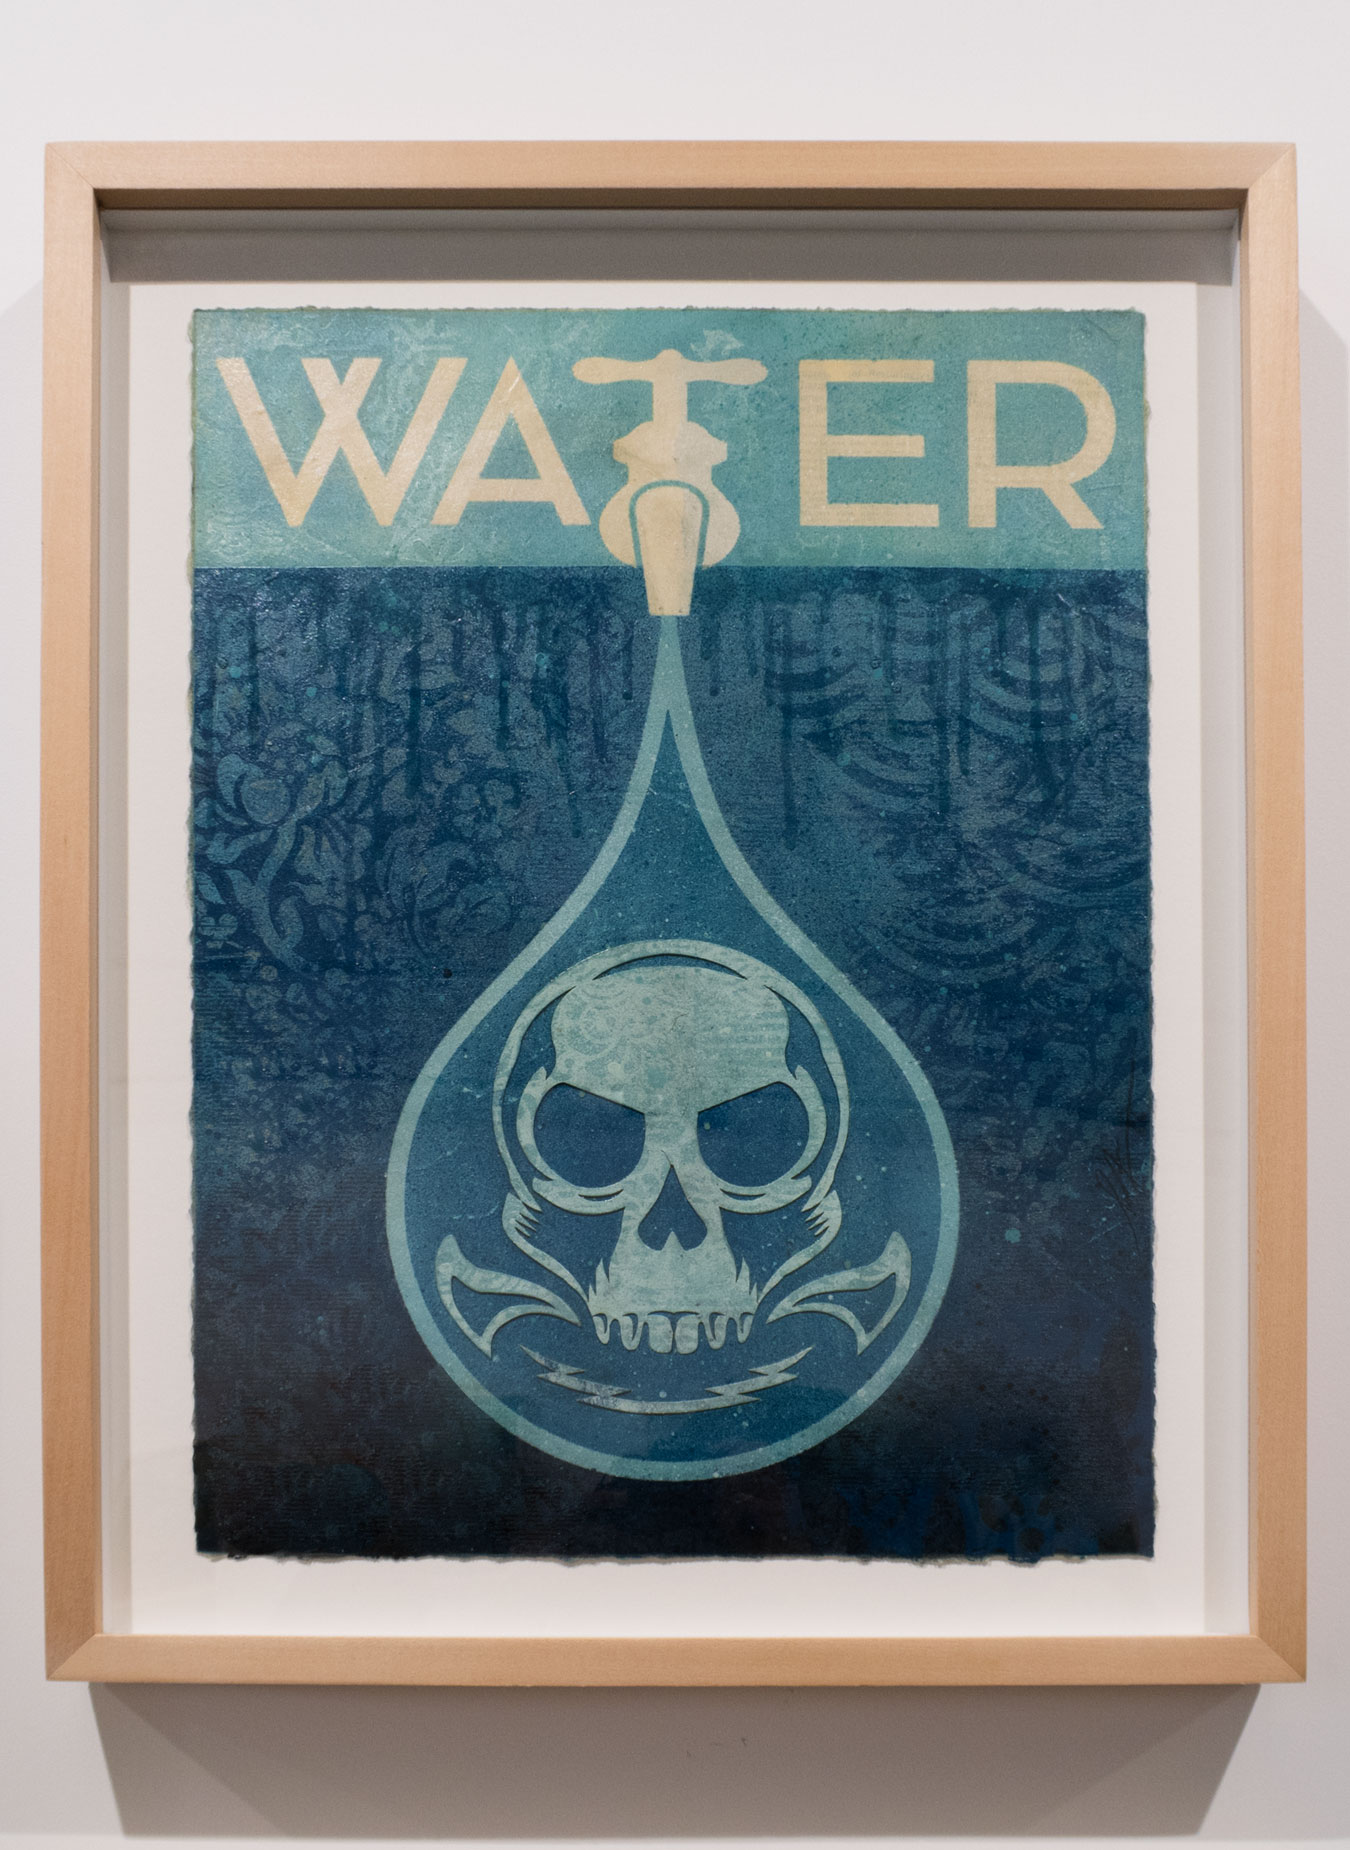 Water / Earth Crisis Exhibition / Shepard Fairey 2016